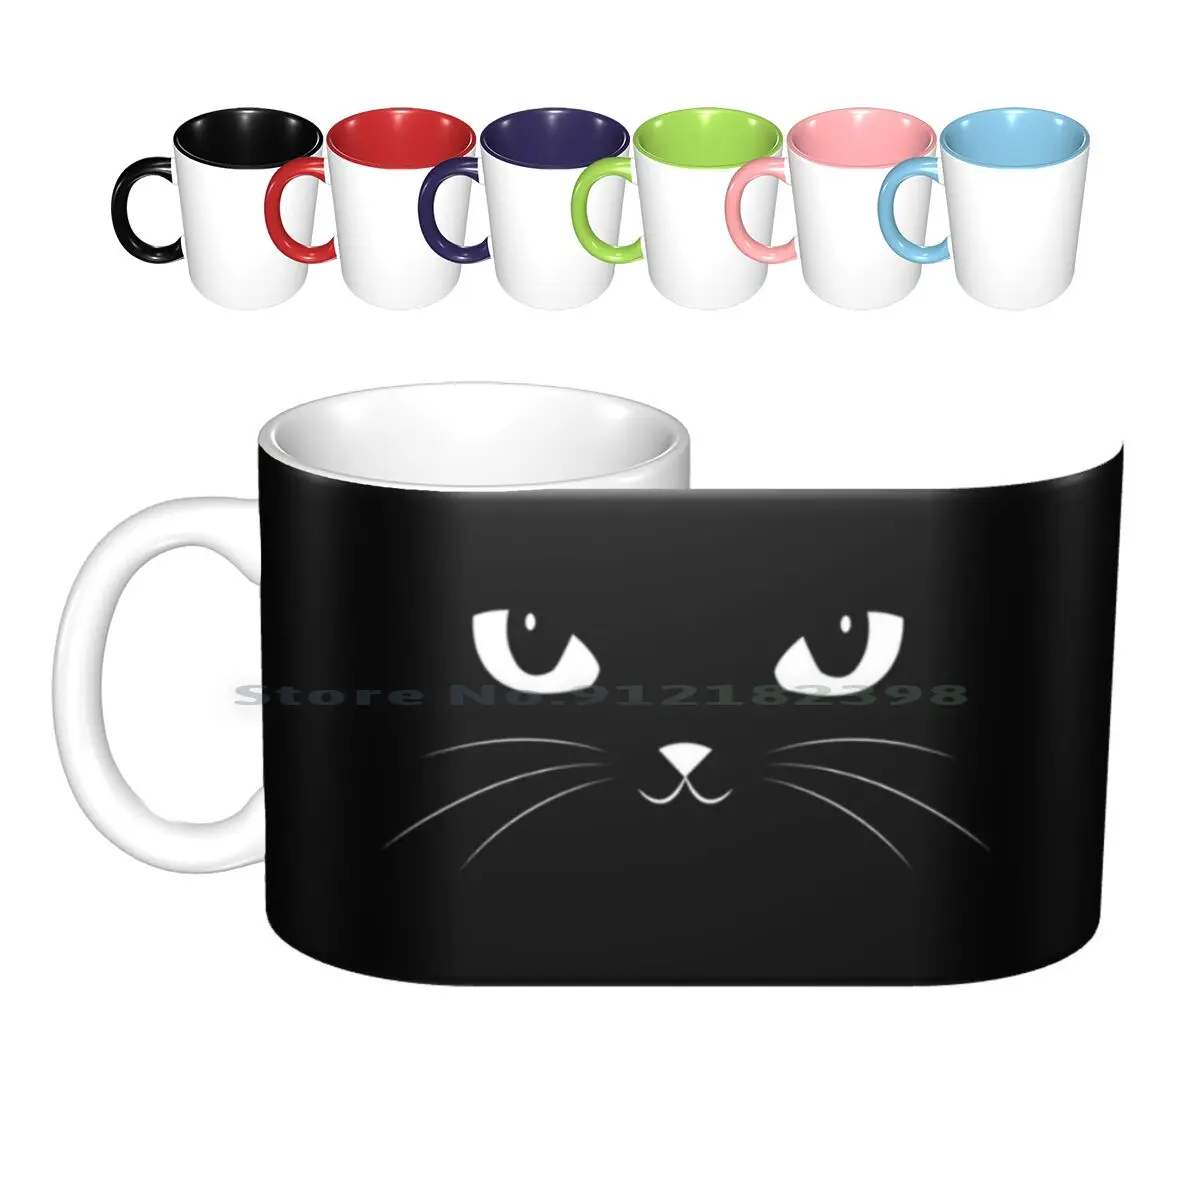 

Cute Black Cat Ceramic Mugs Coffee Cups Milk Tea Mug Cat Animal Humor Funny Paws Jaws Meow Hilarious Lmao Meme Ats Kittens